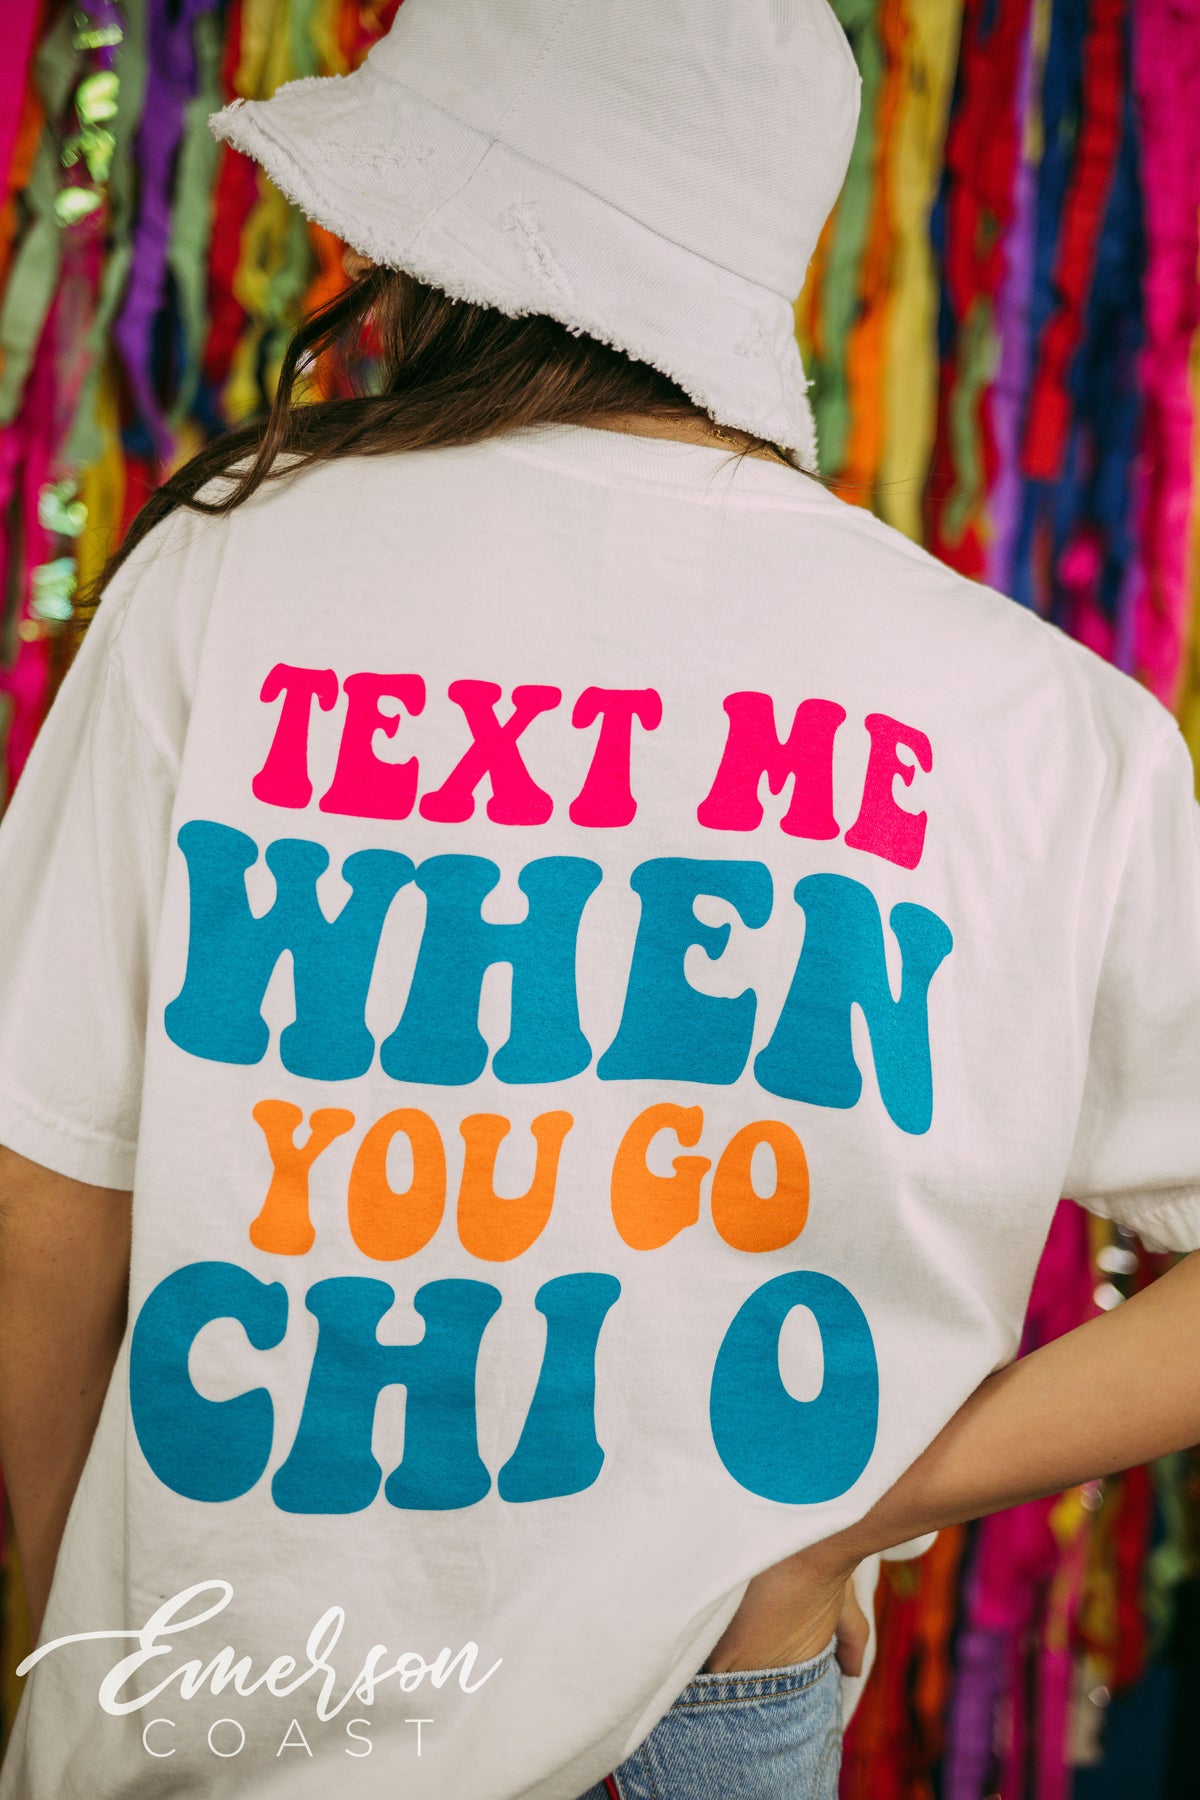 Text Me When You Go Chi O PR Tshirt